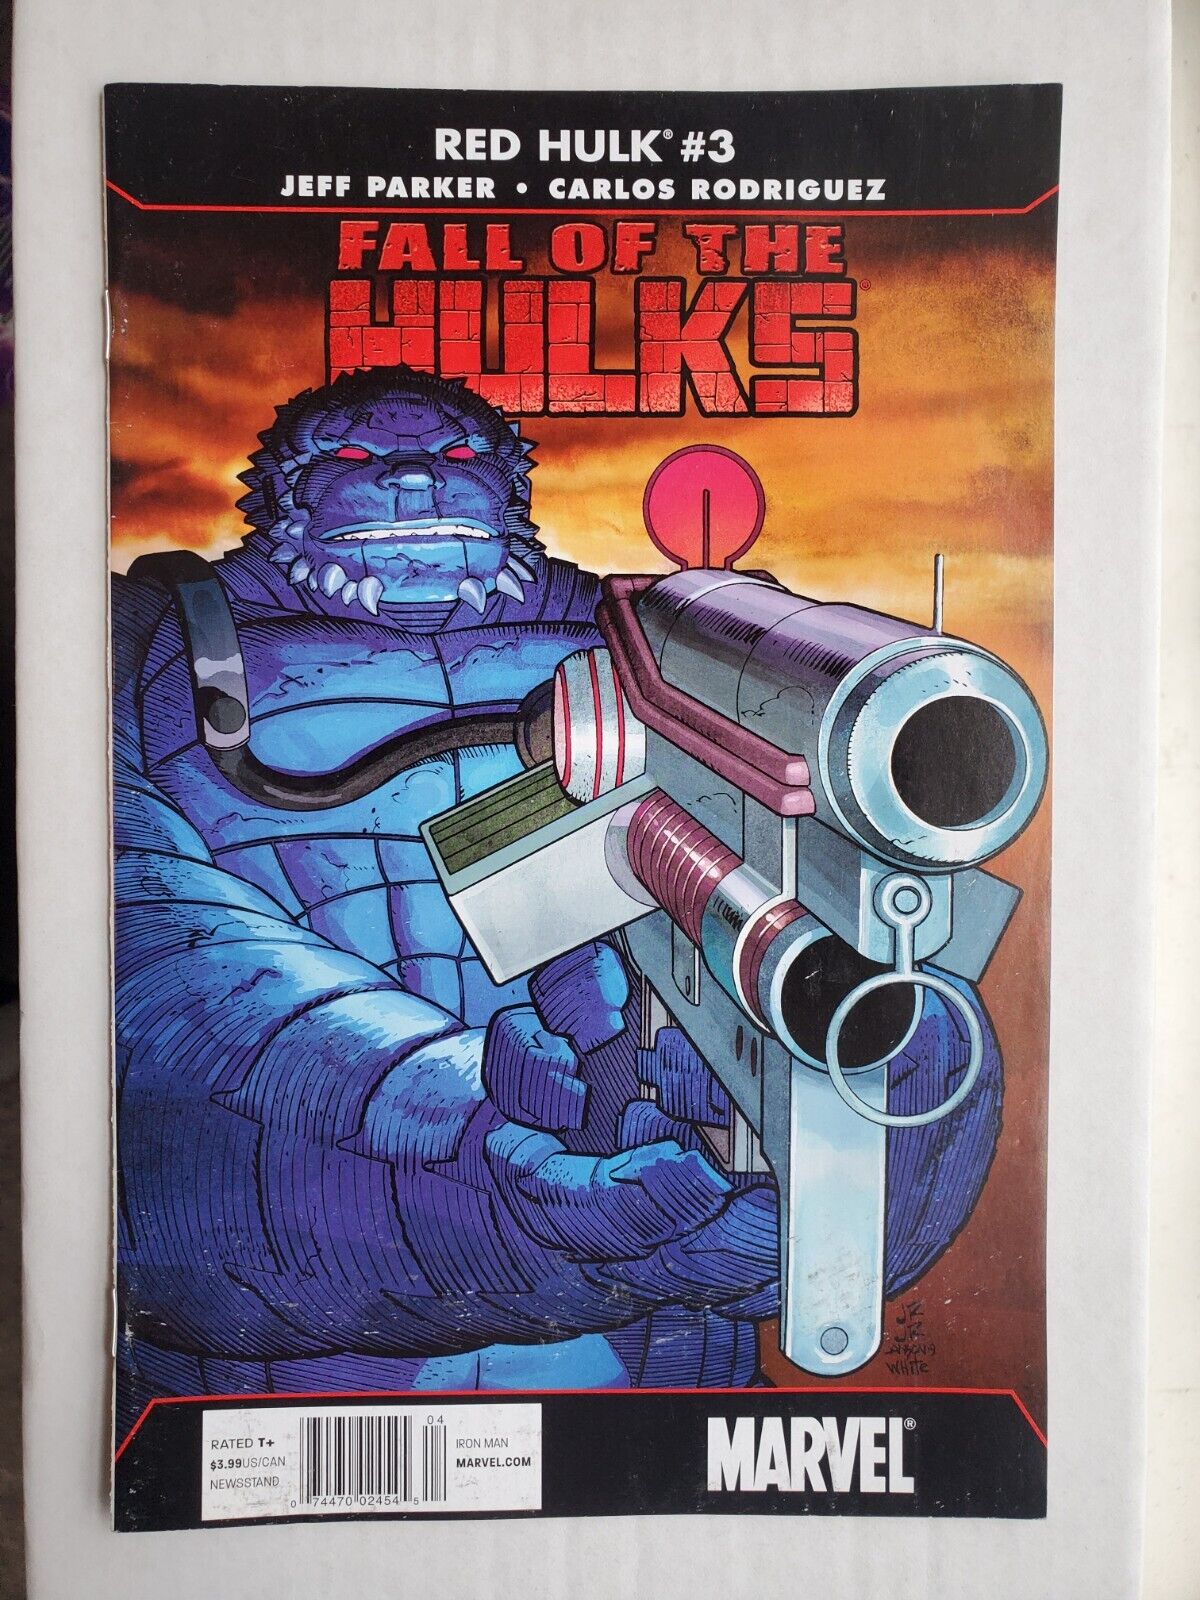 Fall Of The Hulks Red Hulk #3 Rare 1:50 Newsstand 3.99 Price Variant 771 Copies